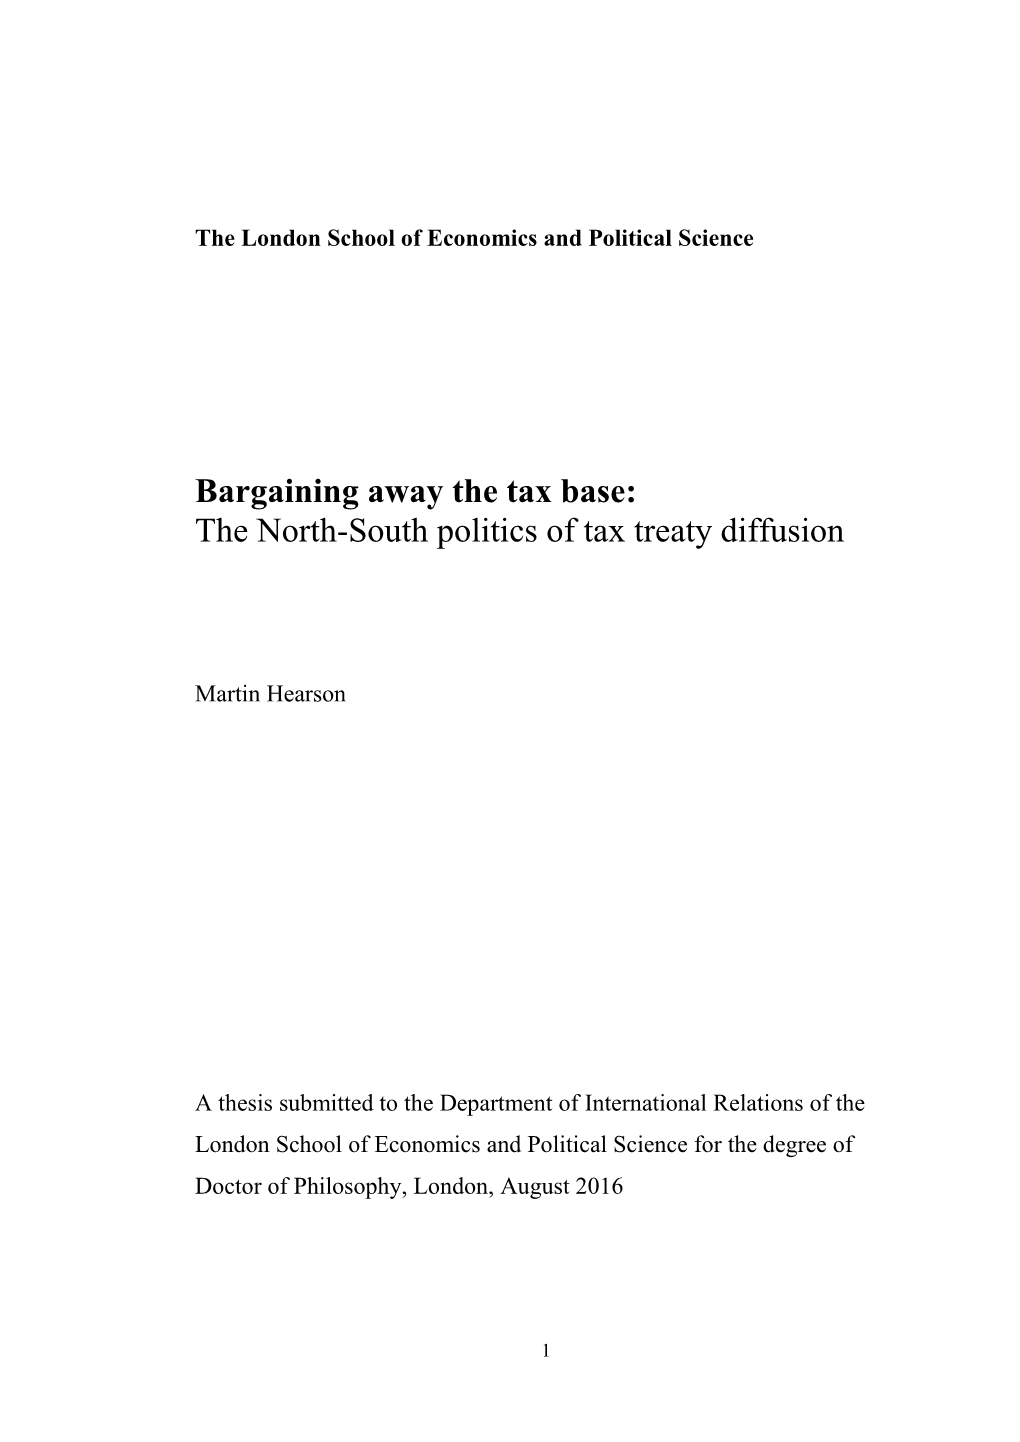 The North-South Politics of Tax Treaty Diffusion